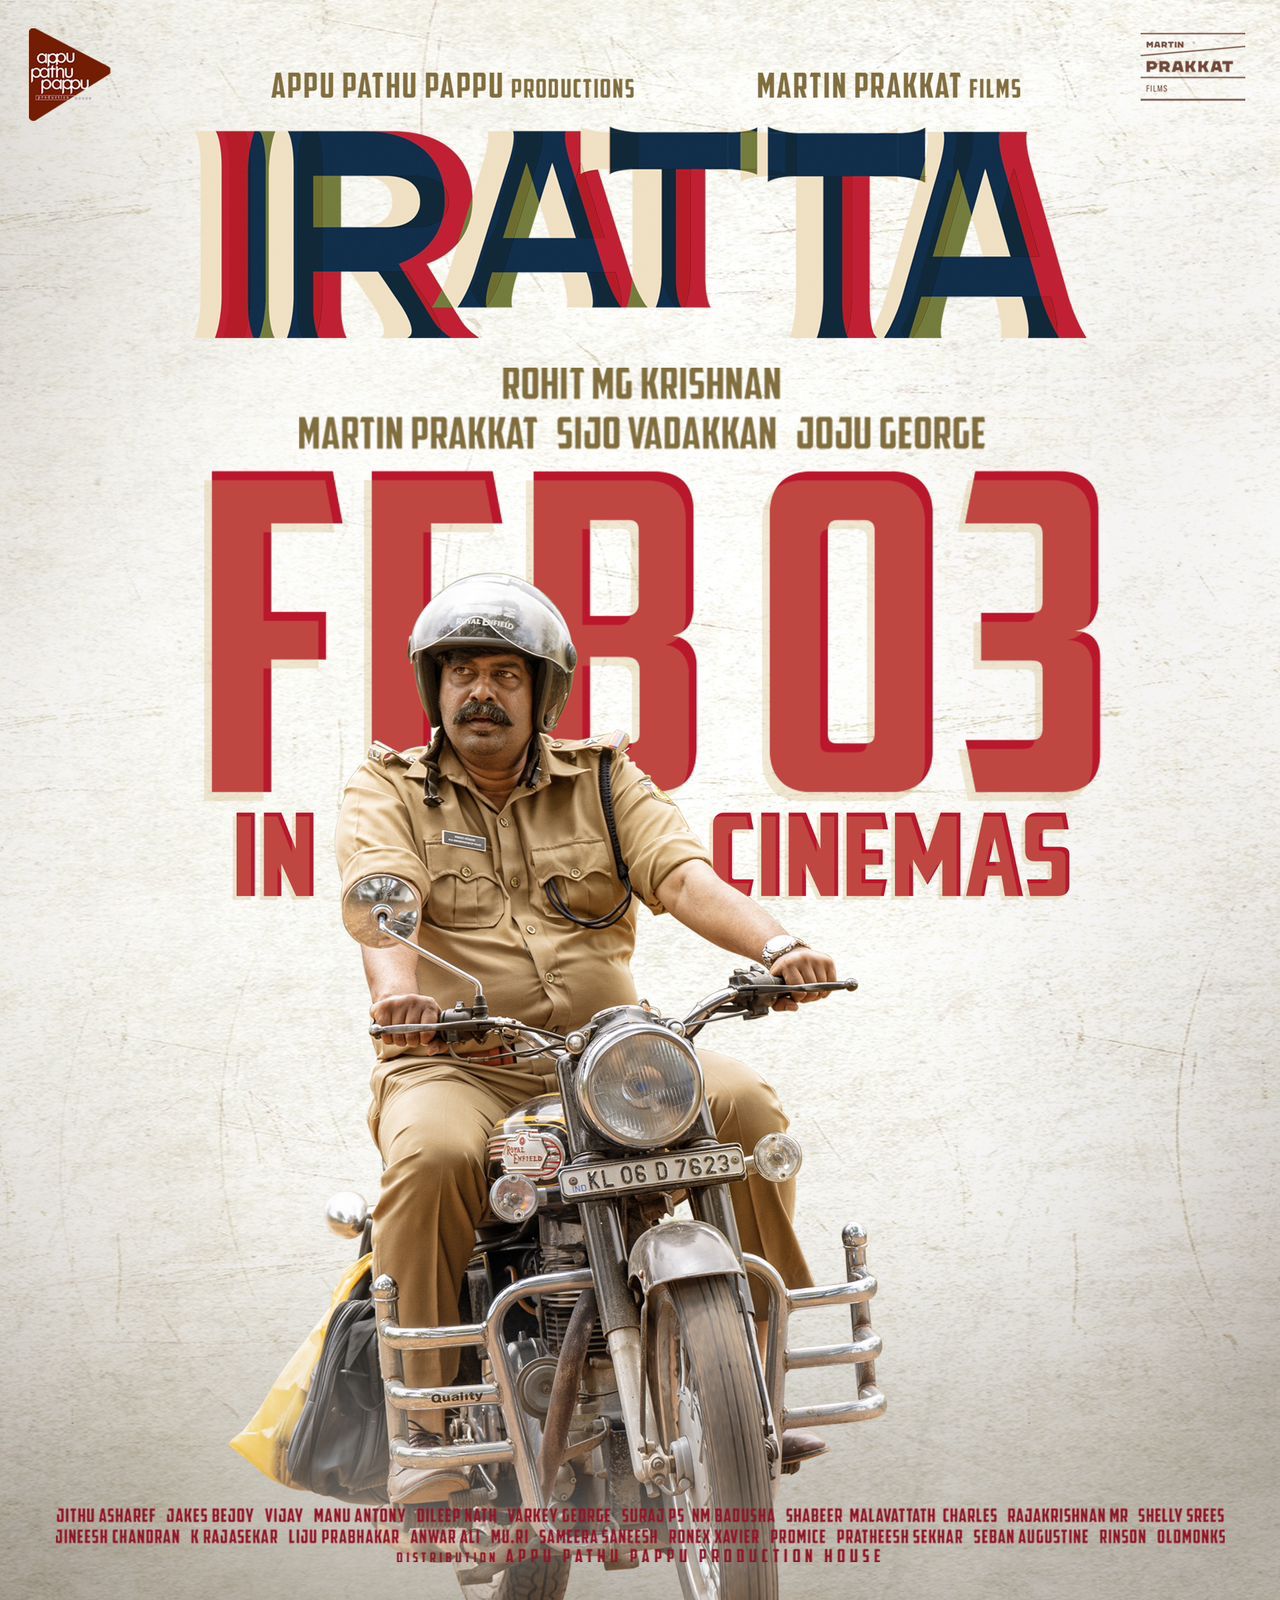 iratta movie review film companion